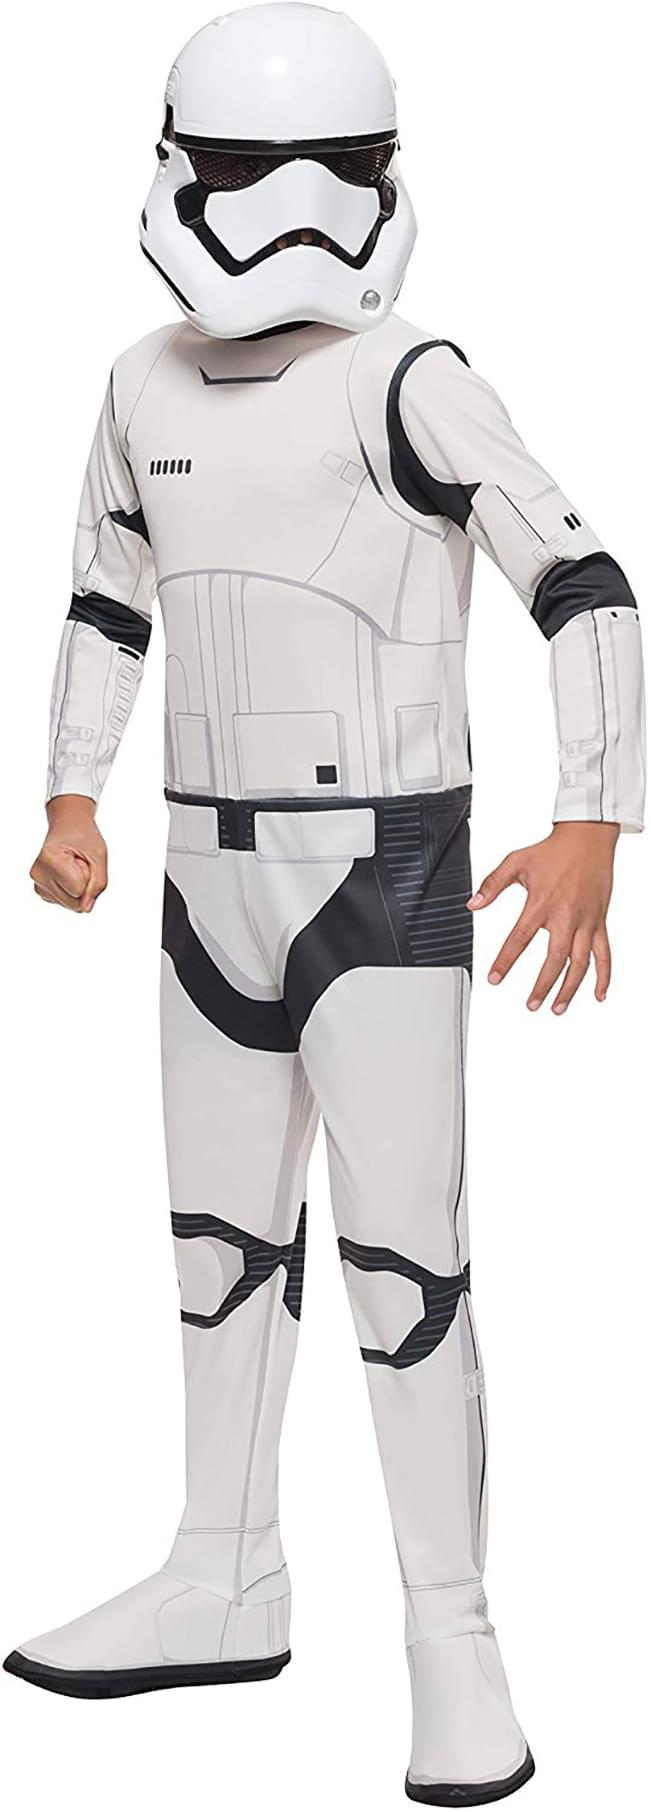 Star Wars The Force Awakens Stormtrooper Child Costume